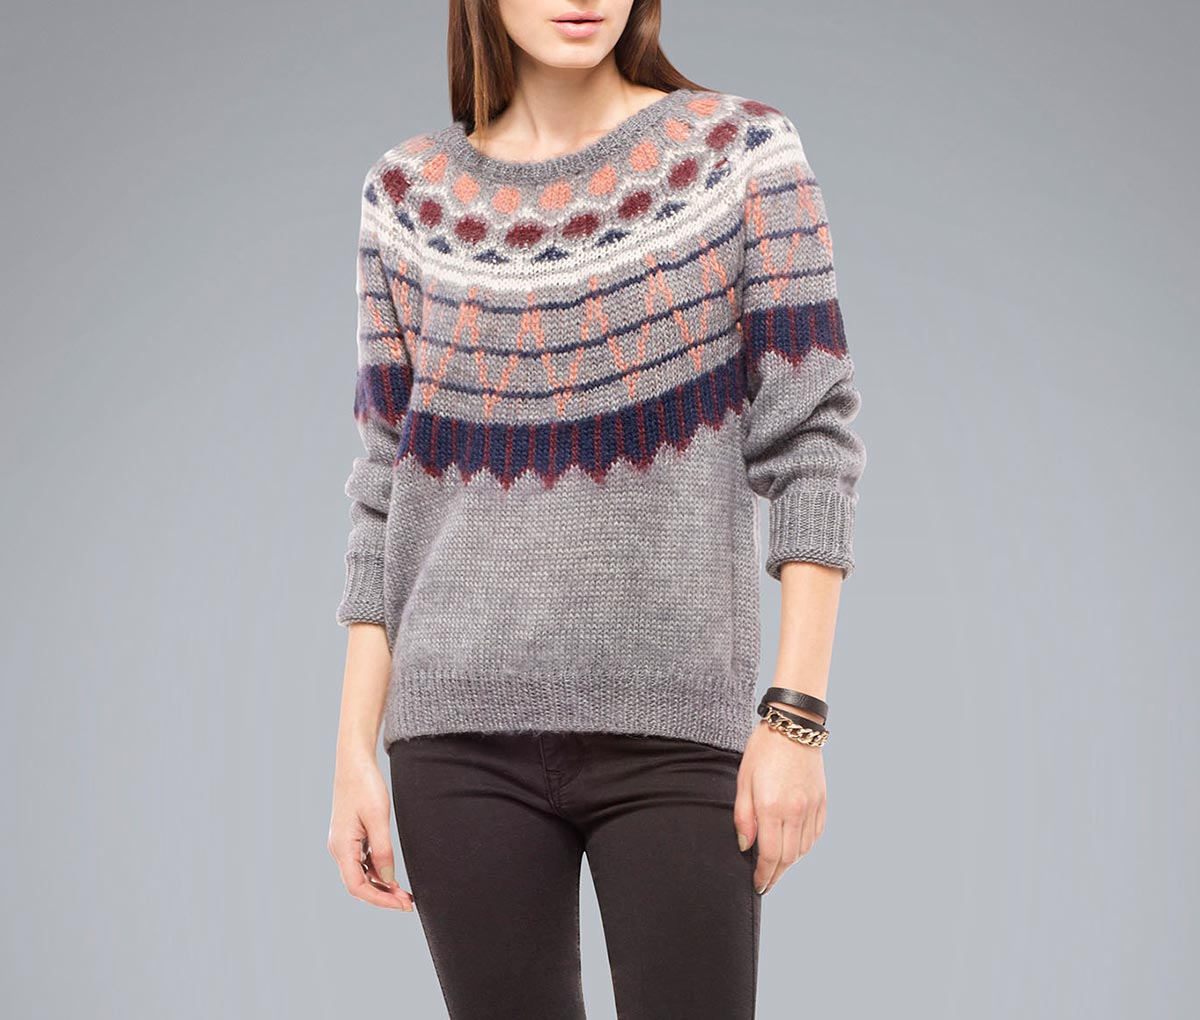 falabella-ponchos-sweaters-fashion-diaries-12